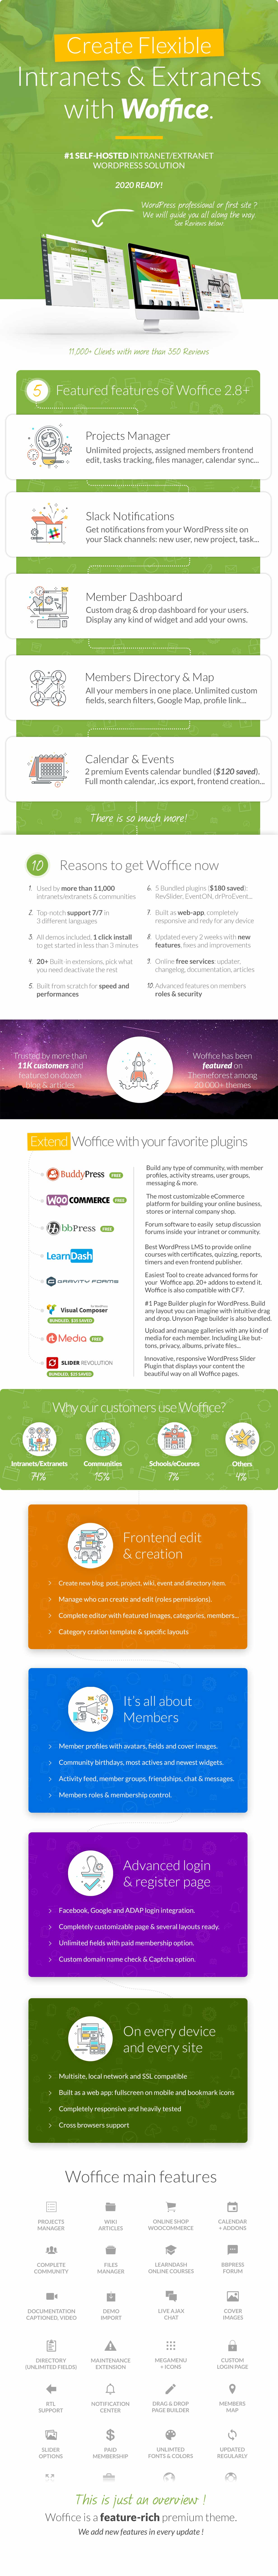 marketing 6.0 - Woffice - Intranet/Extranet WordPress Theme